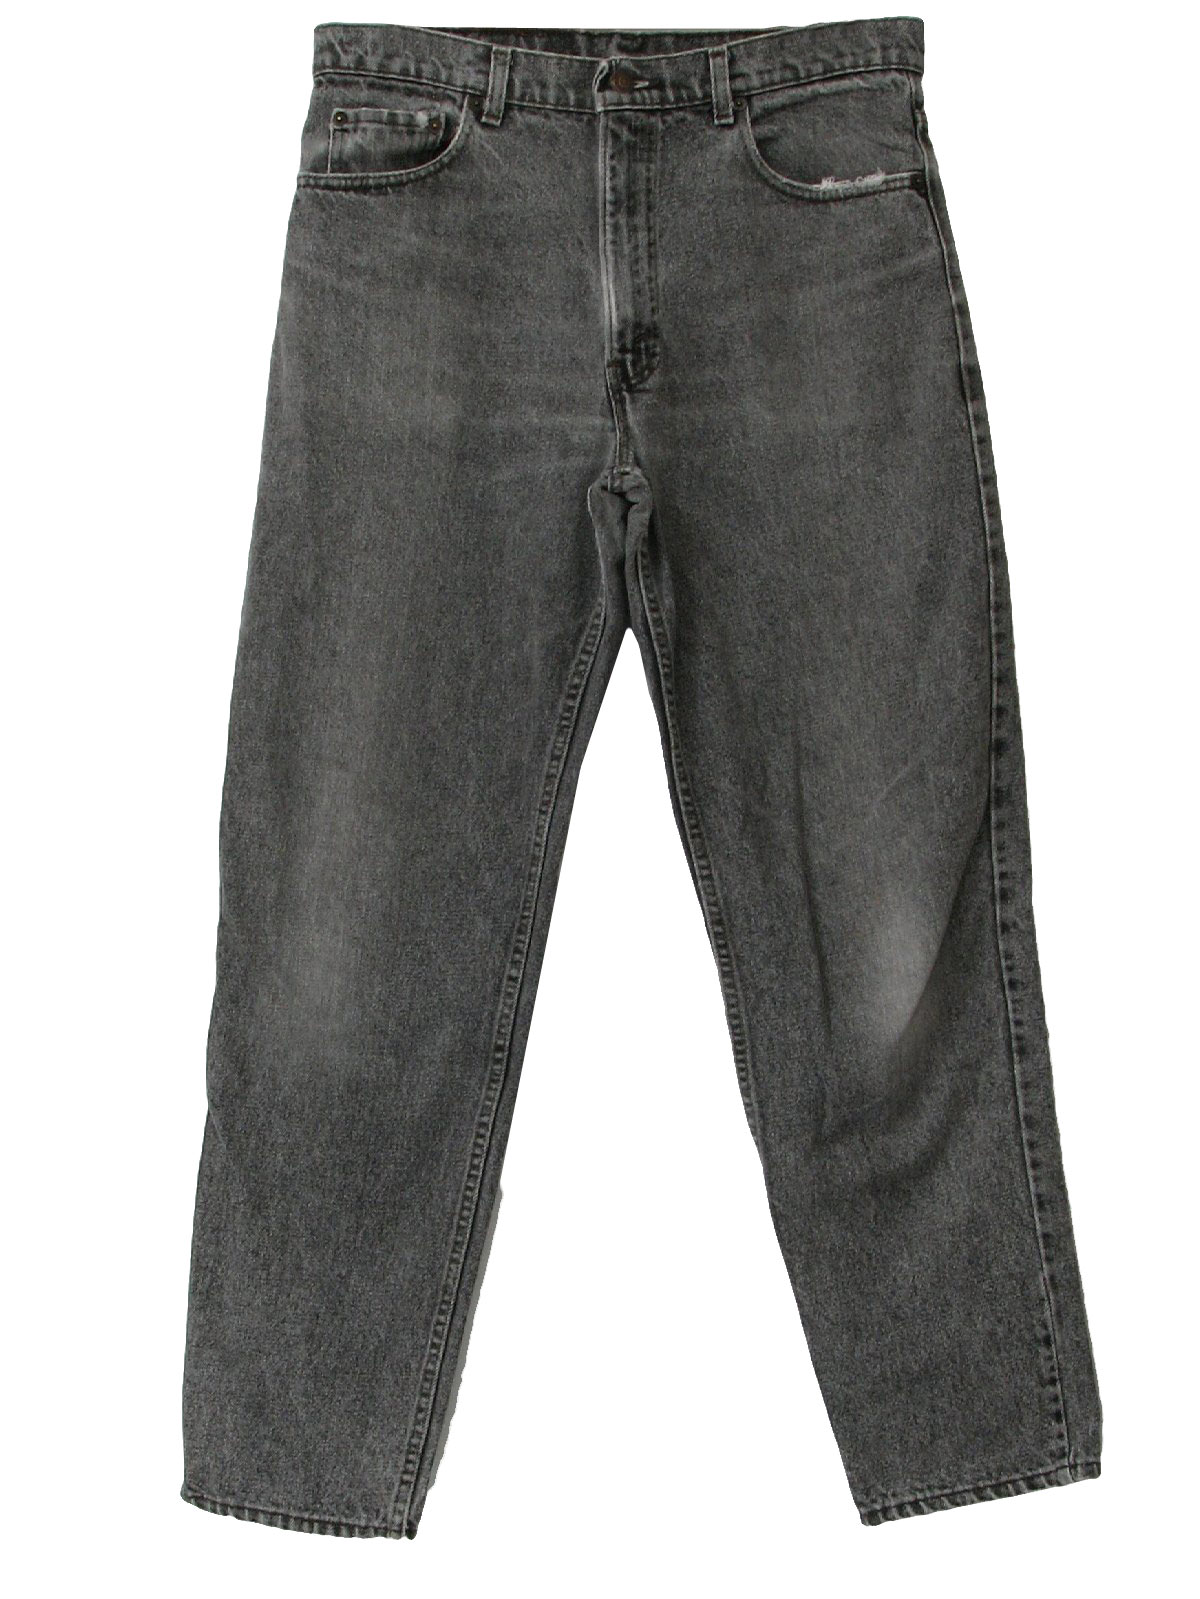 Retro 90s Pants (Levis) : 90s -Levis- Mens faded dark grey denim cotton ...